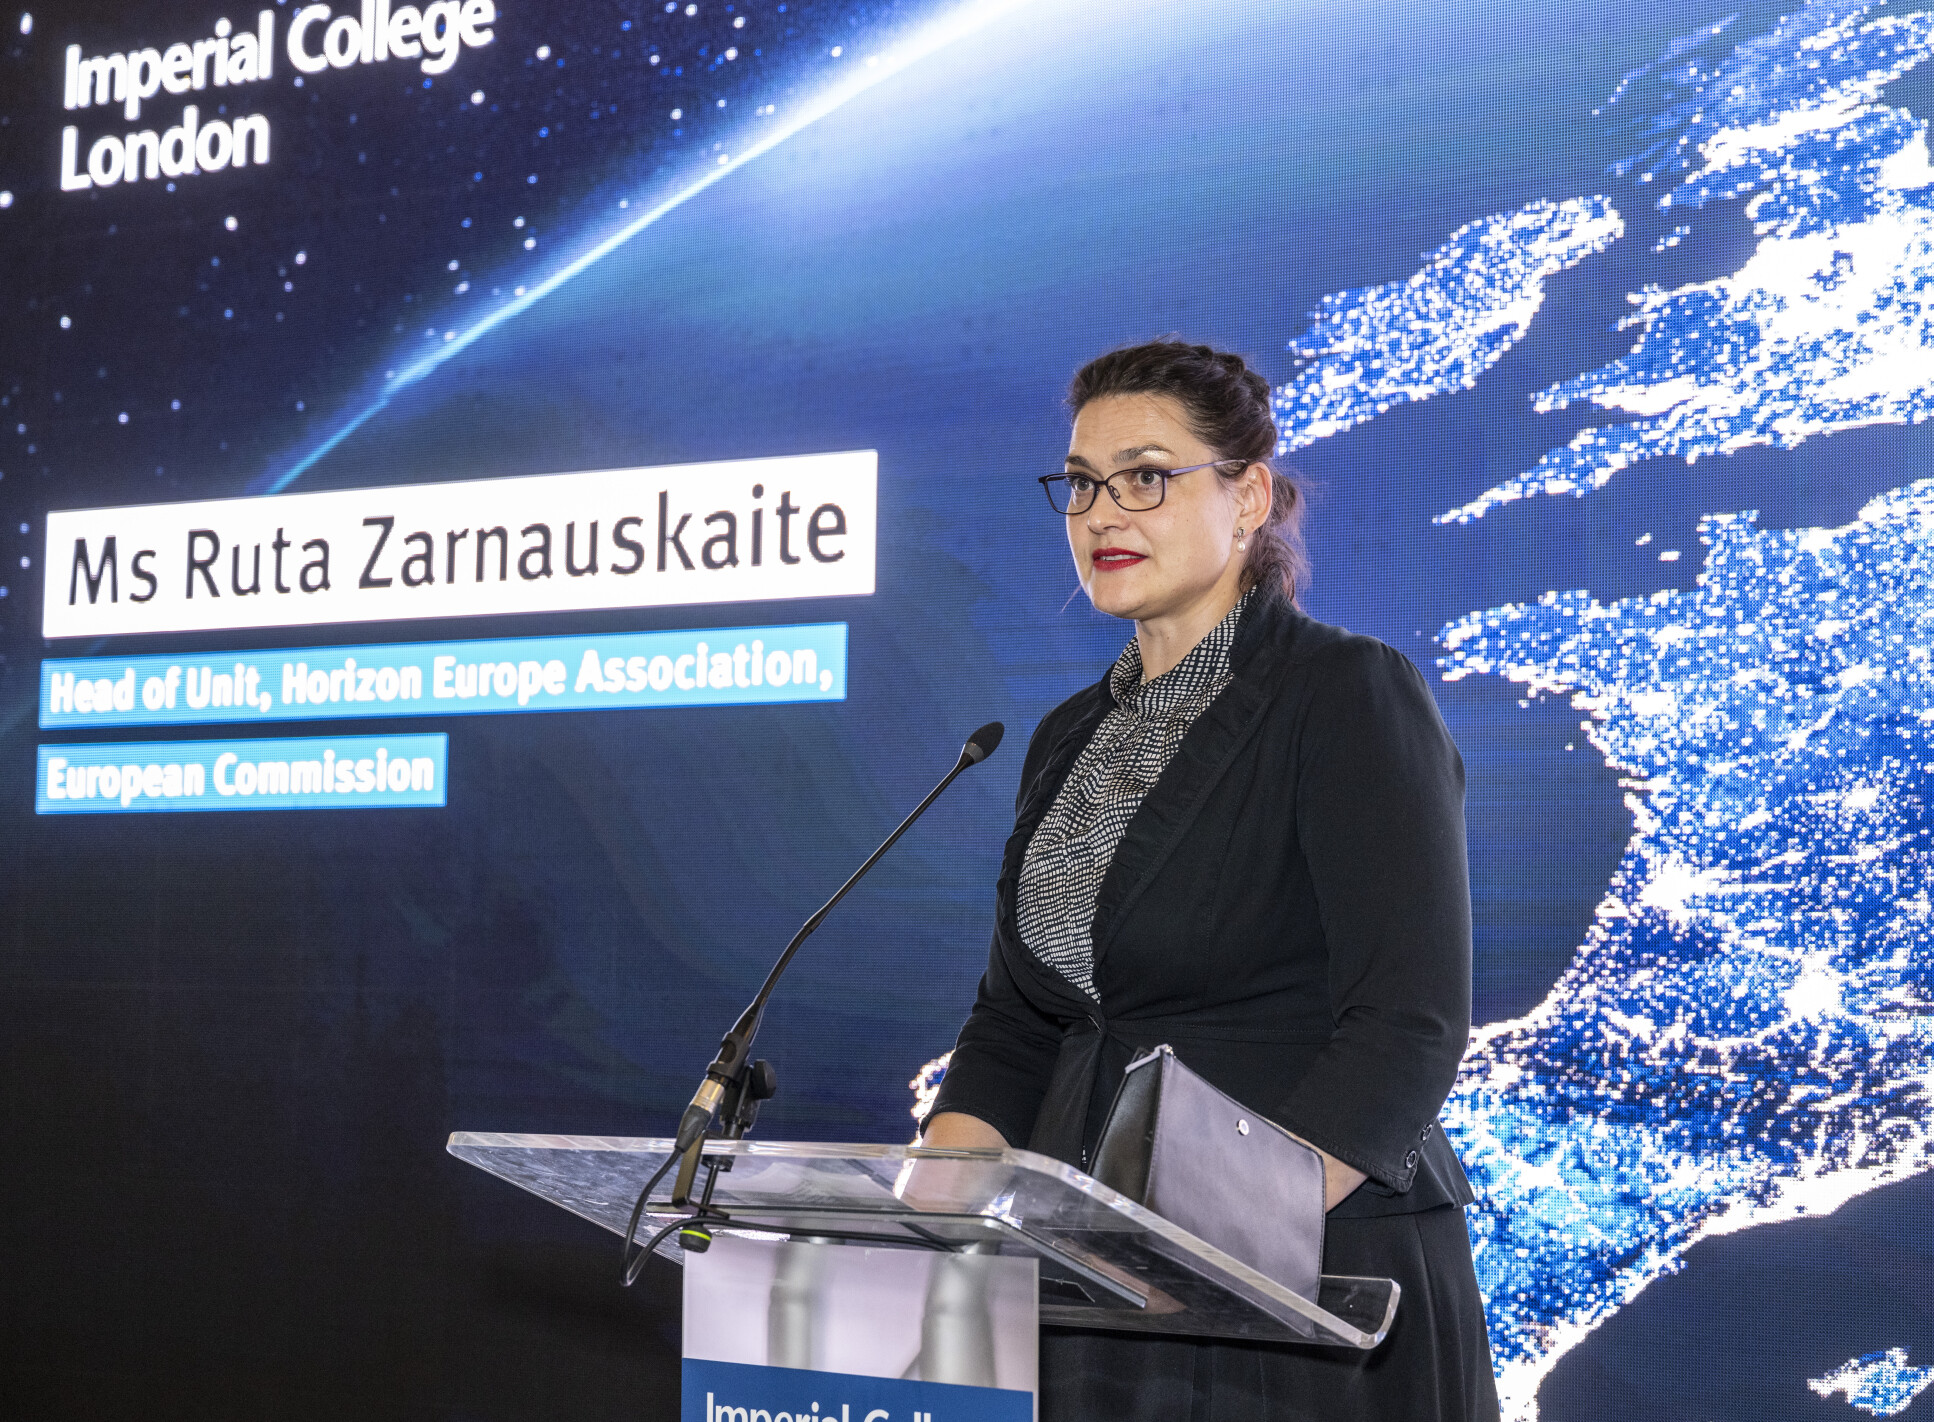 Ms Ruta Zarnauskaite, Head of the Horizon Europe Association unit, European Commission speaking at the Horizon reception 